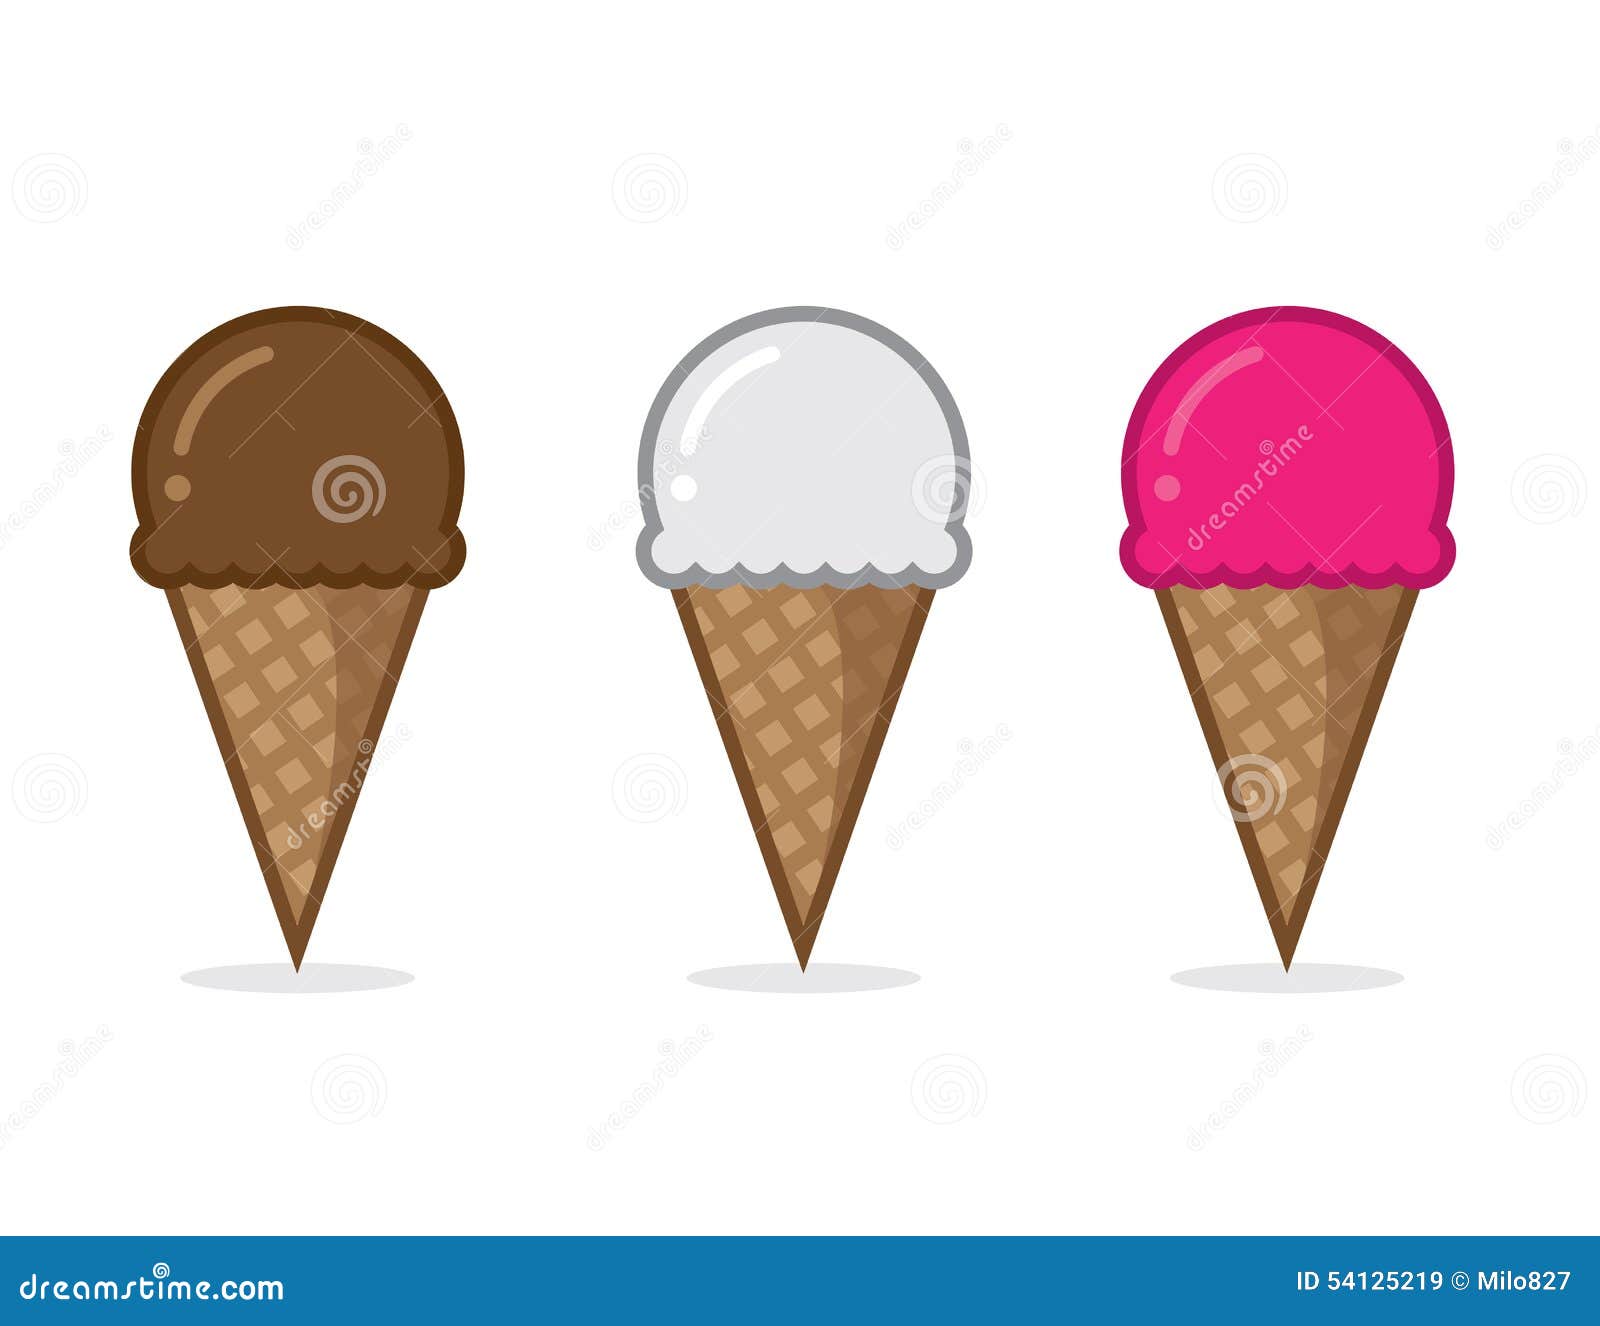 ice cream cone flavors